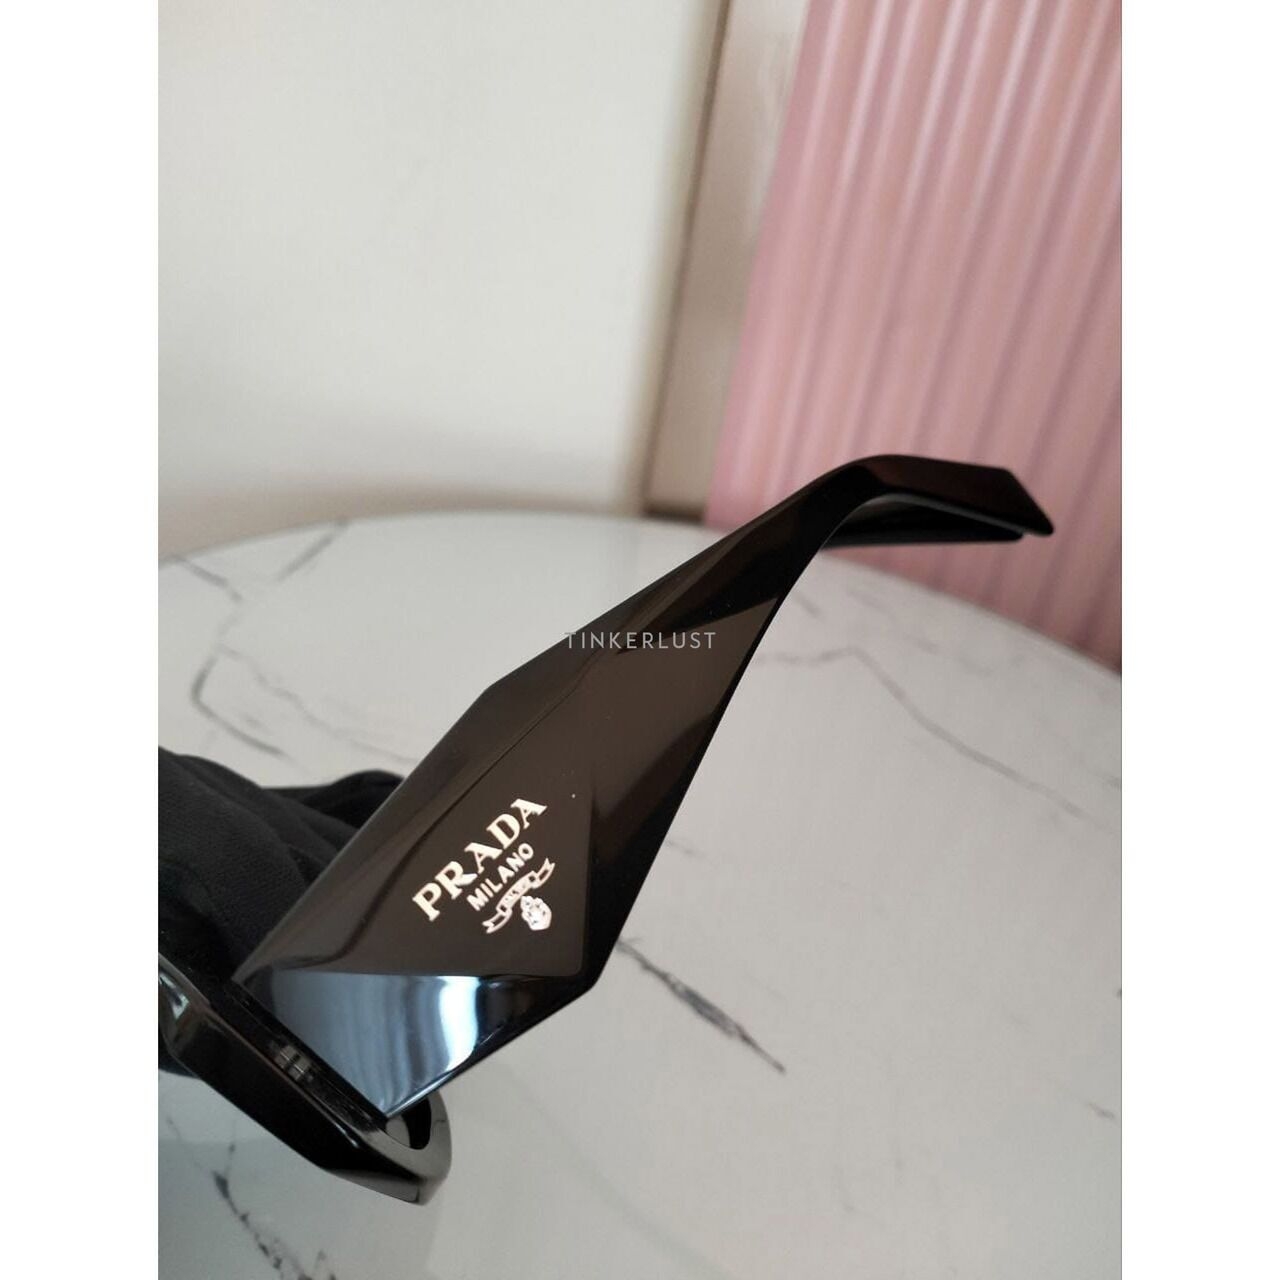 Prada Triangle Logo Sunglasses in Black